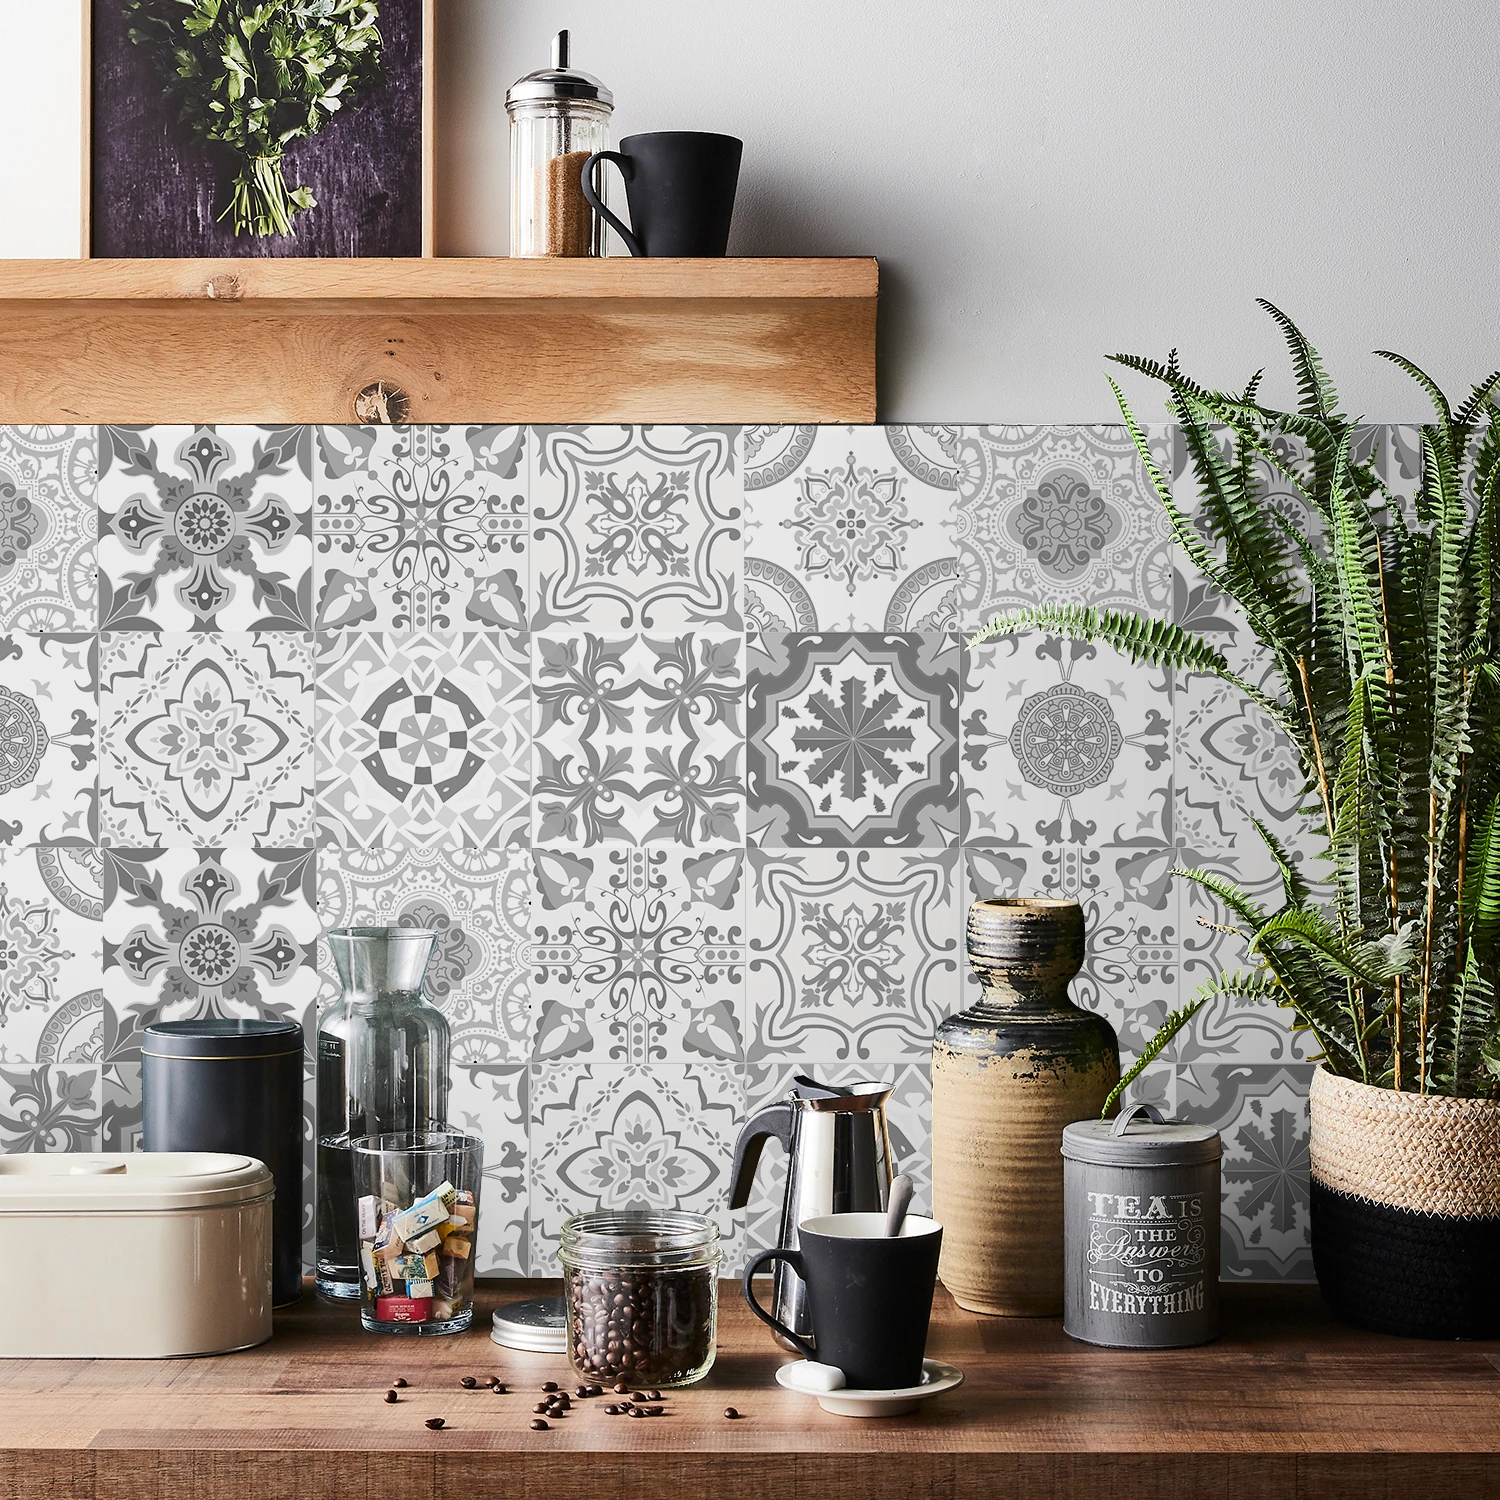 24pcs Retro Grey Kitchen Tile Sticker Wall Waterproof Self Adhesive Wallpaper PVC Furniture Cabinet Surface DIY Decorative Decal